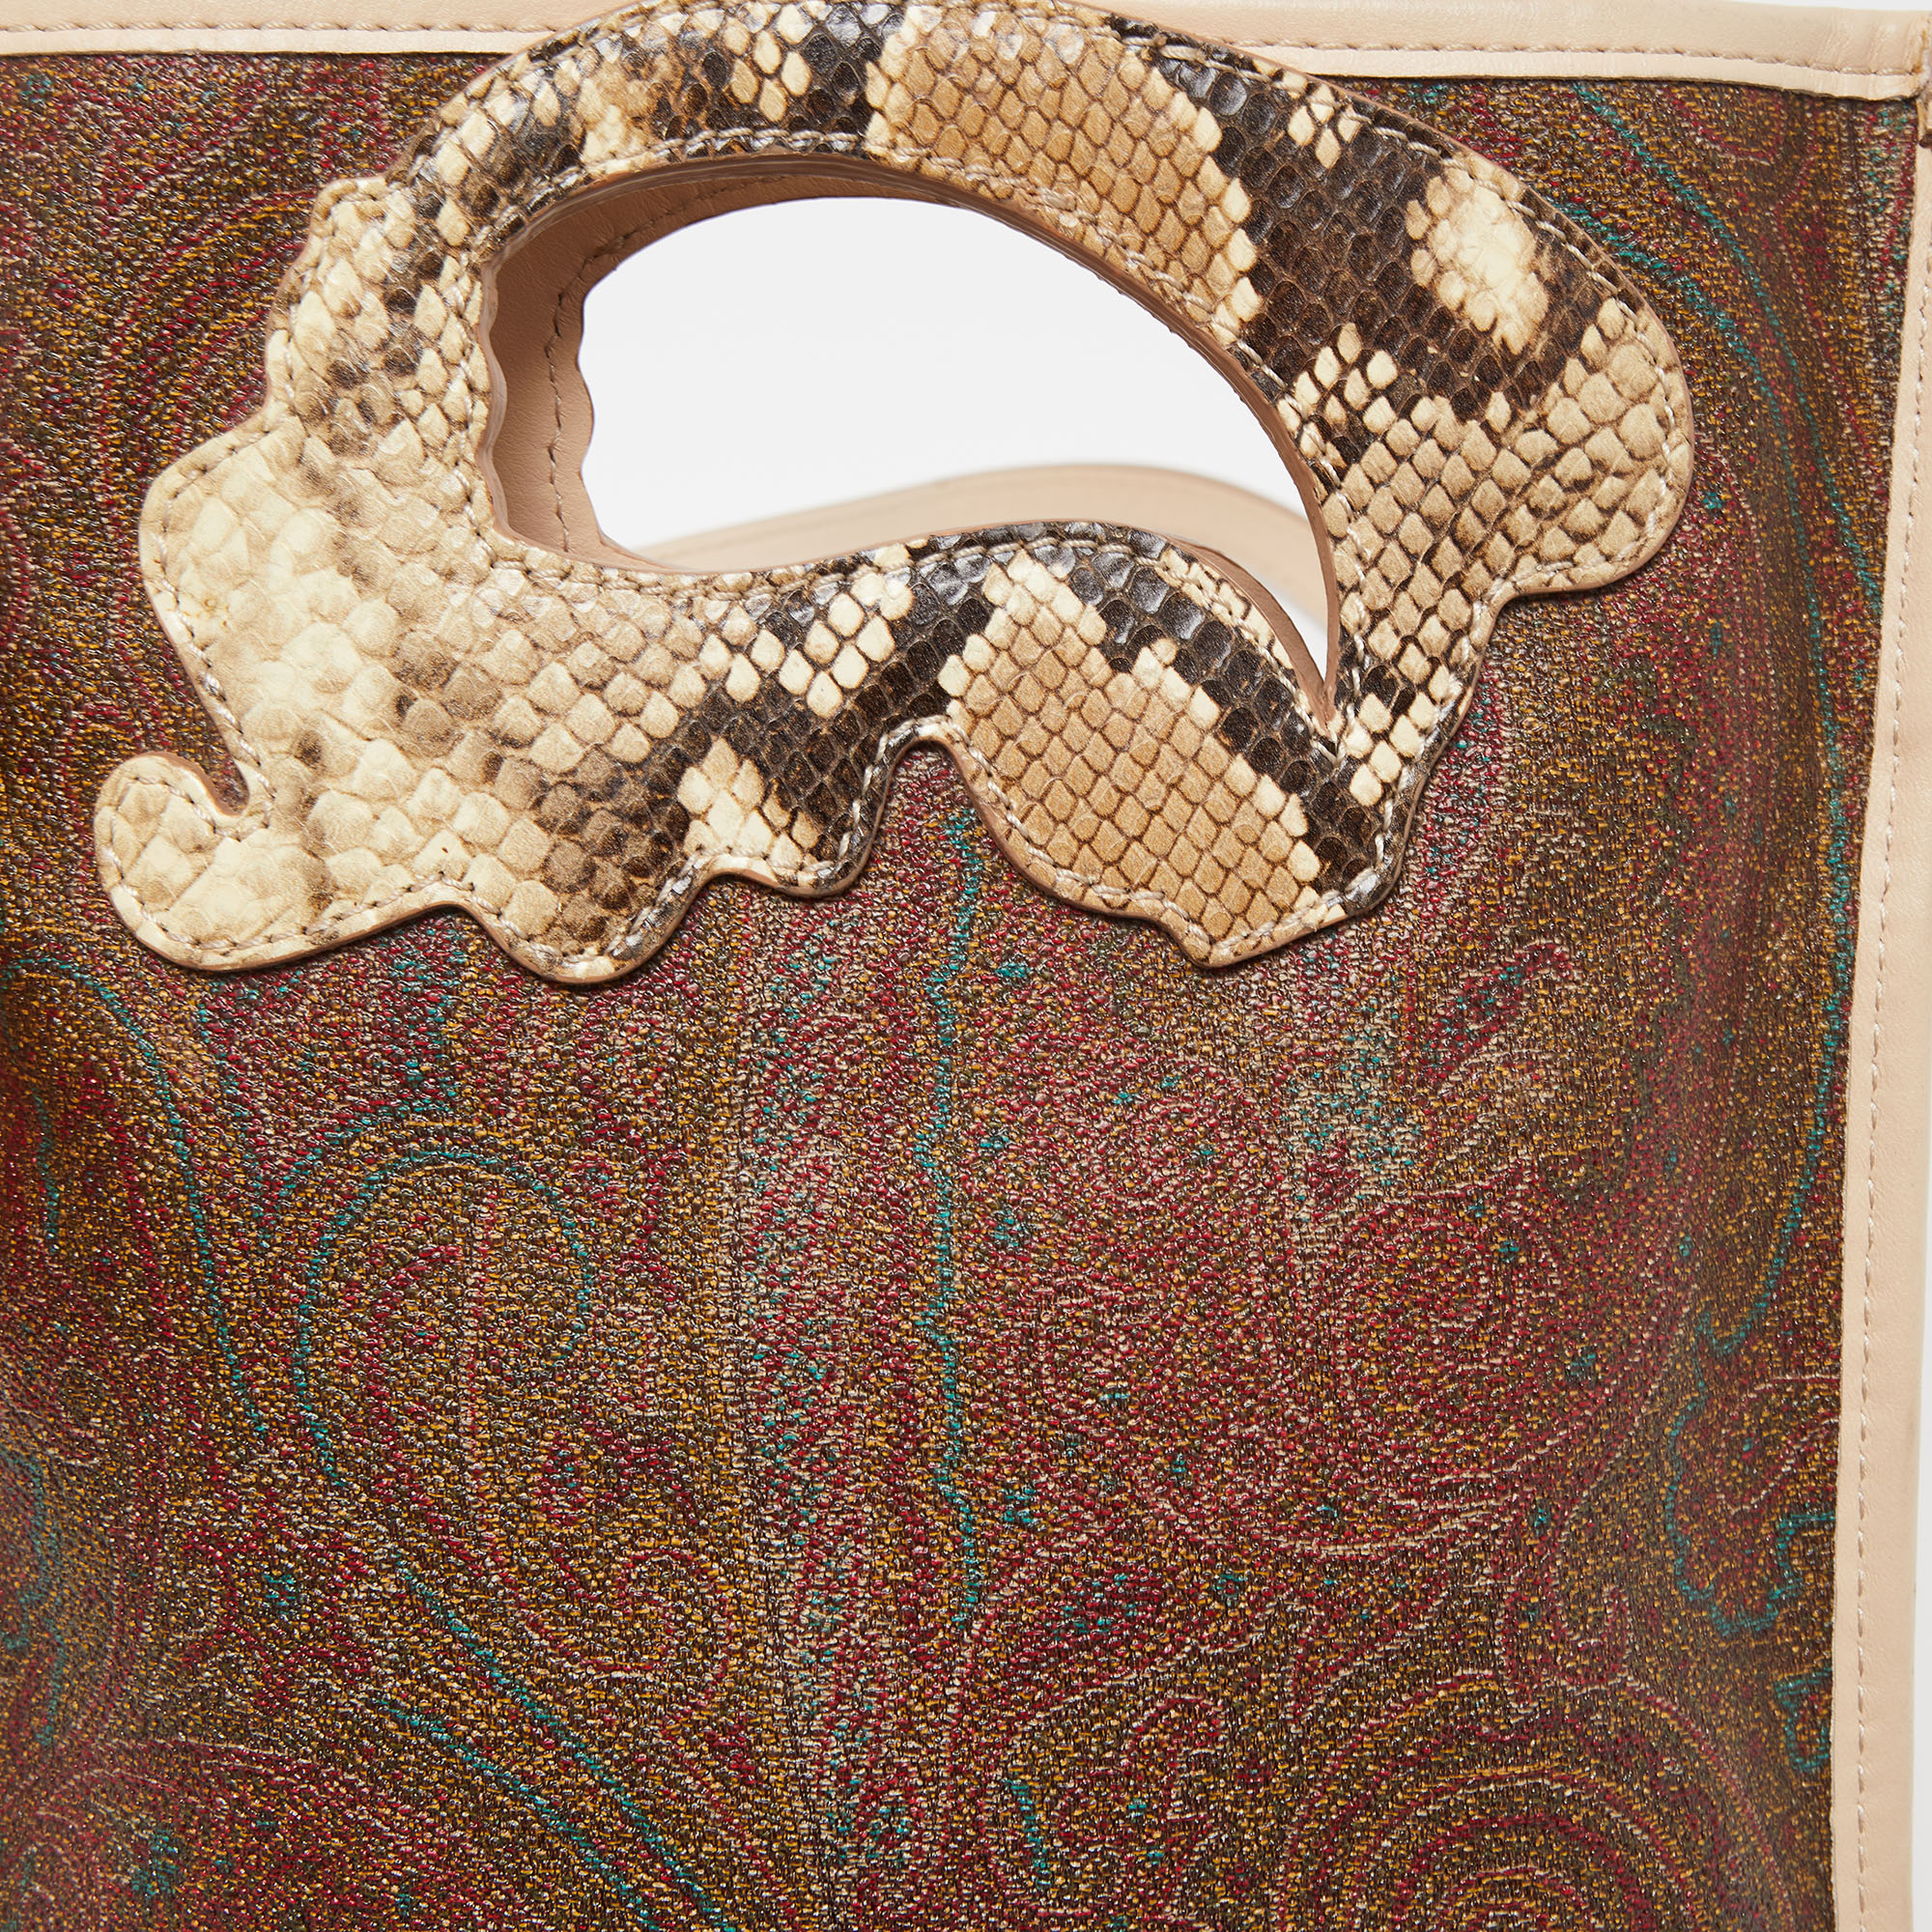 Etro Light Beige/Brown Paisley Coated Canvas Python Embossed Crossbody Bag